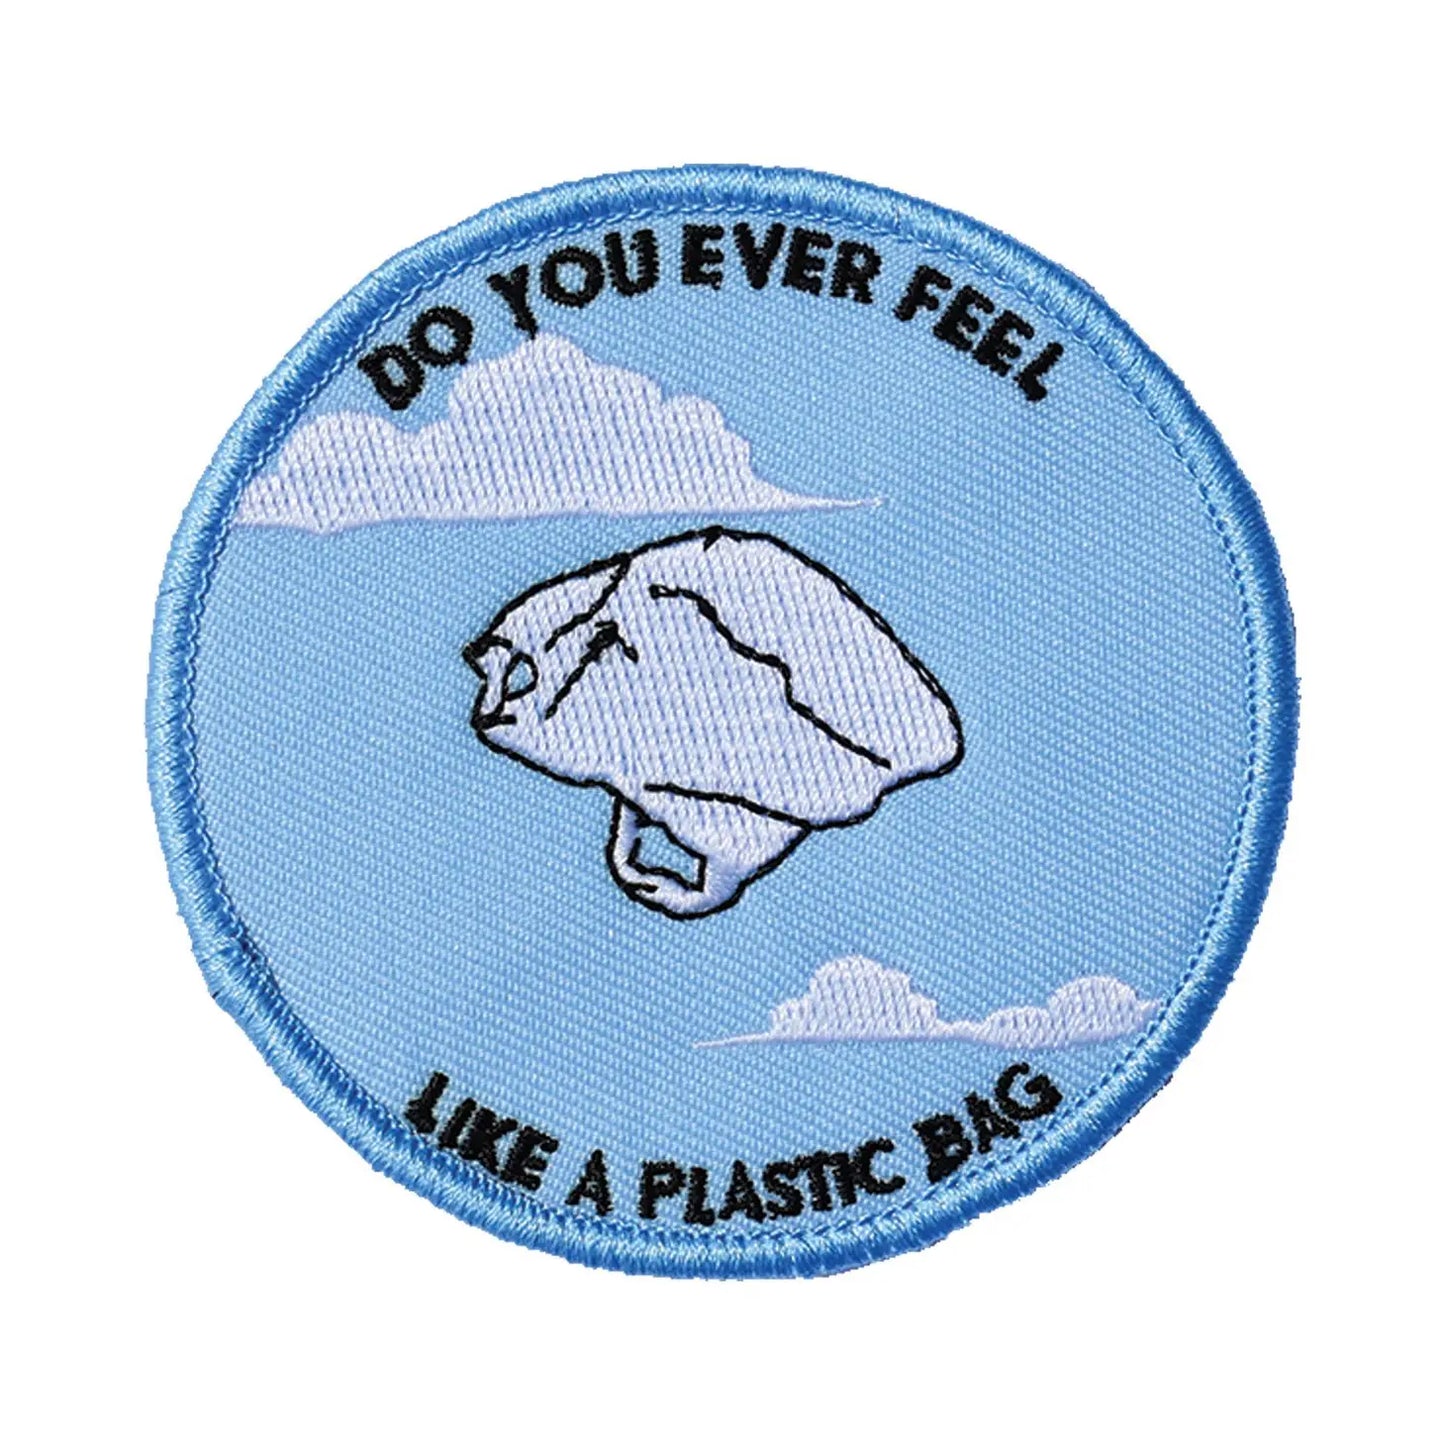 Do You Ever Feel Like A Plastic Bag Patch